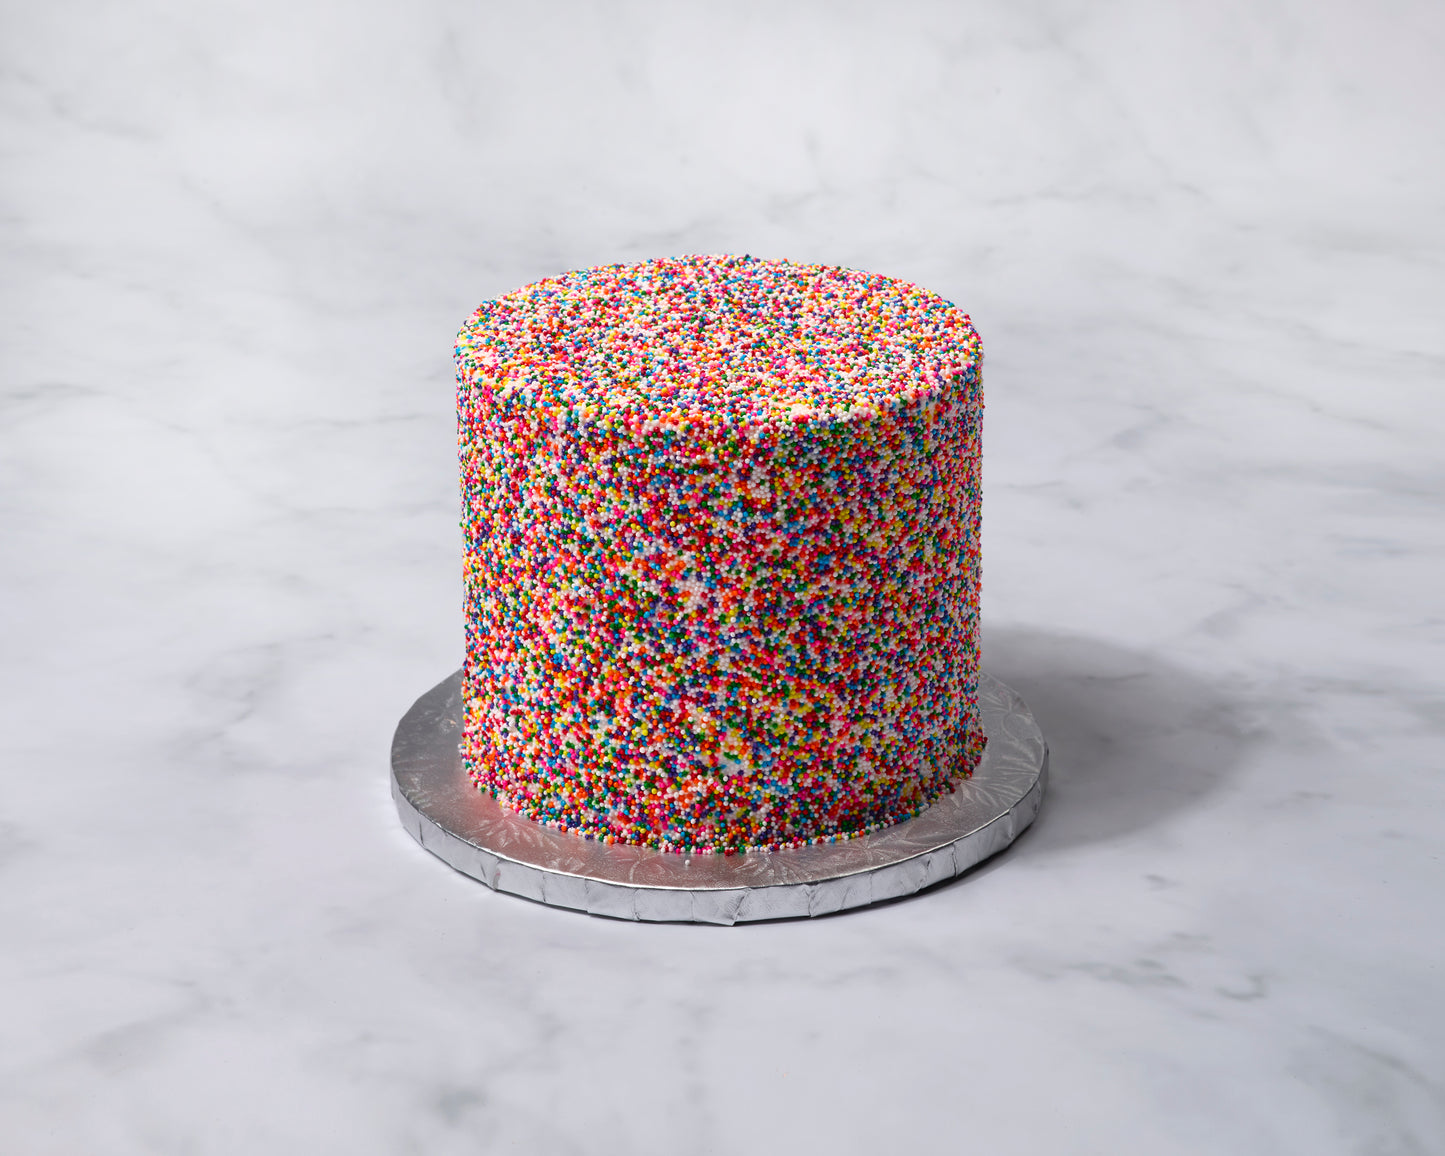 Festive sprinkle cake